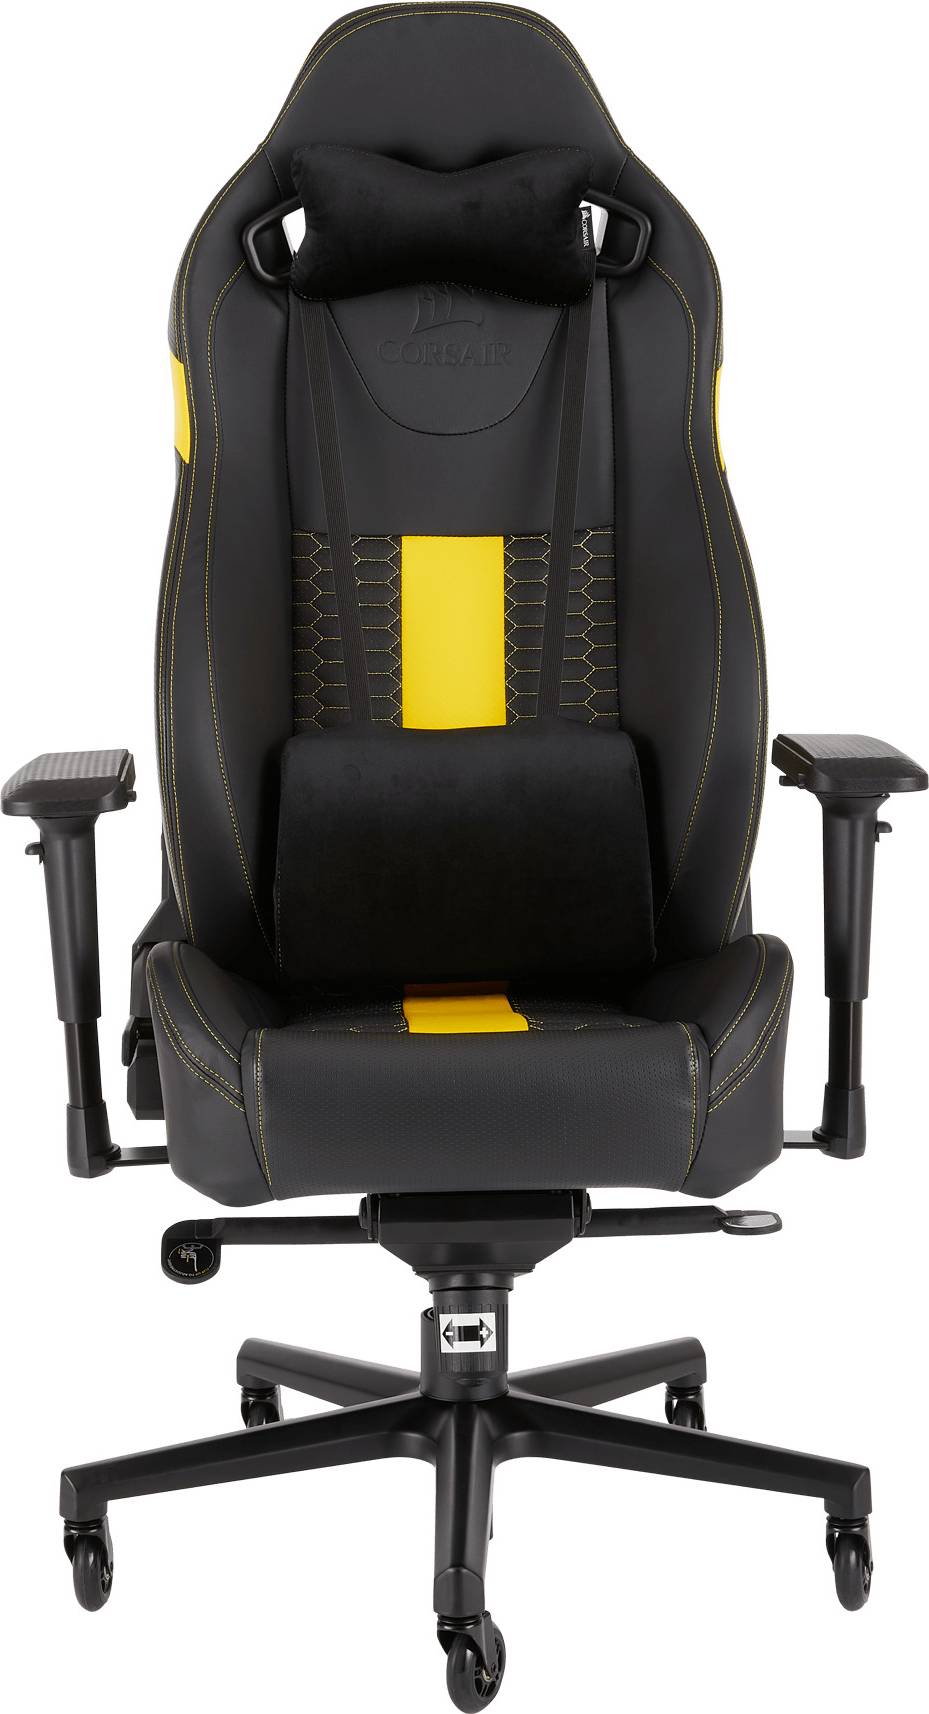  Bild på Corsair T2 Road Warrior Gaming Chair - Black/Yellow gamingstol